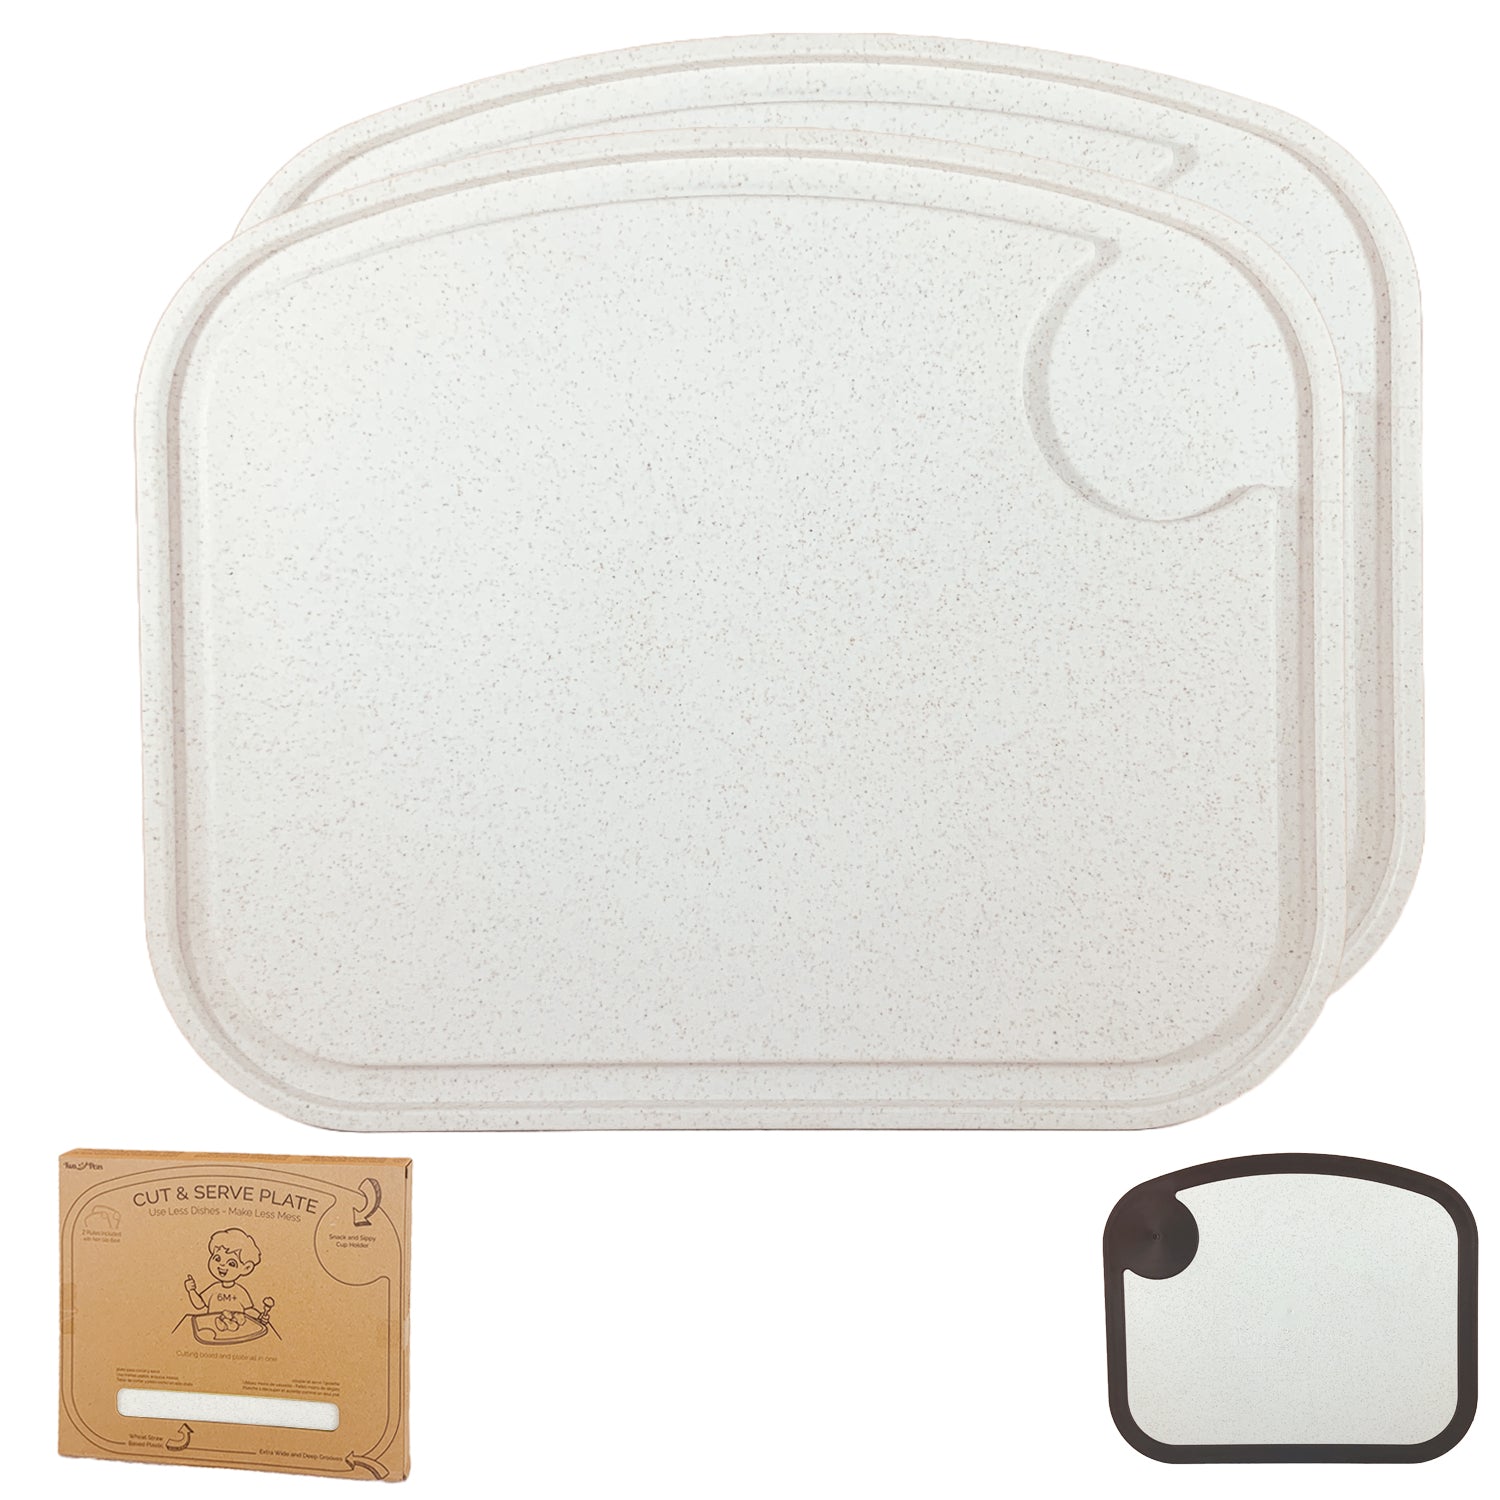 Cutting Board With Holder Base Bpa-free Wheat Straw Plastic